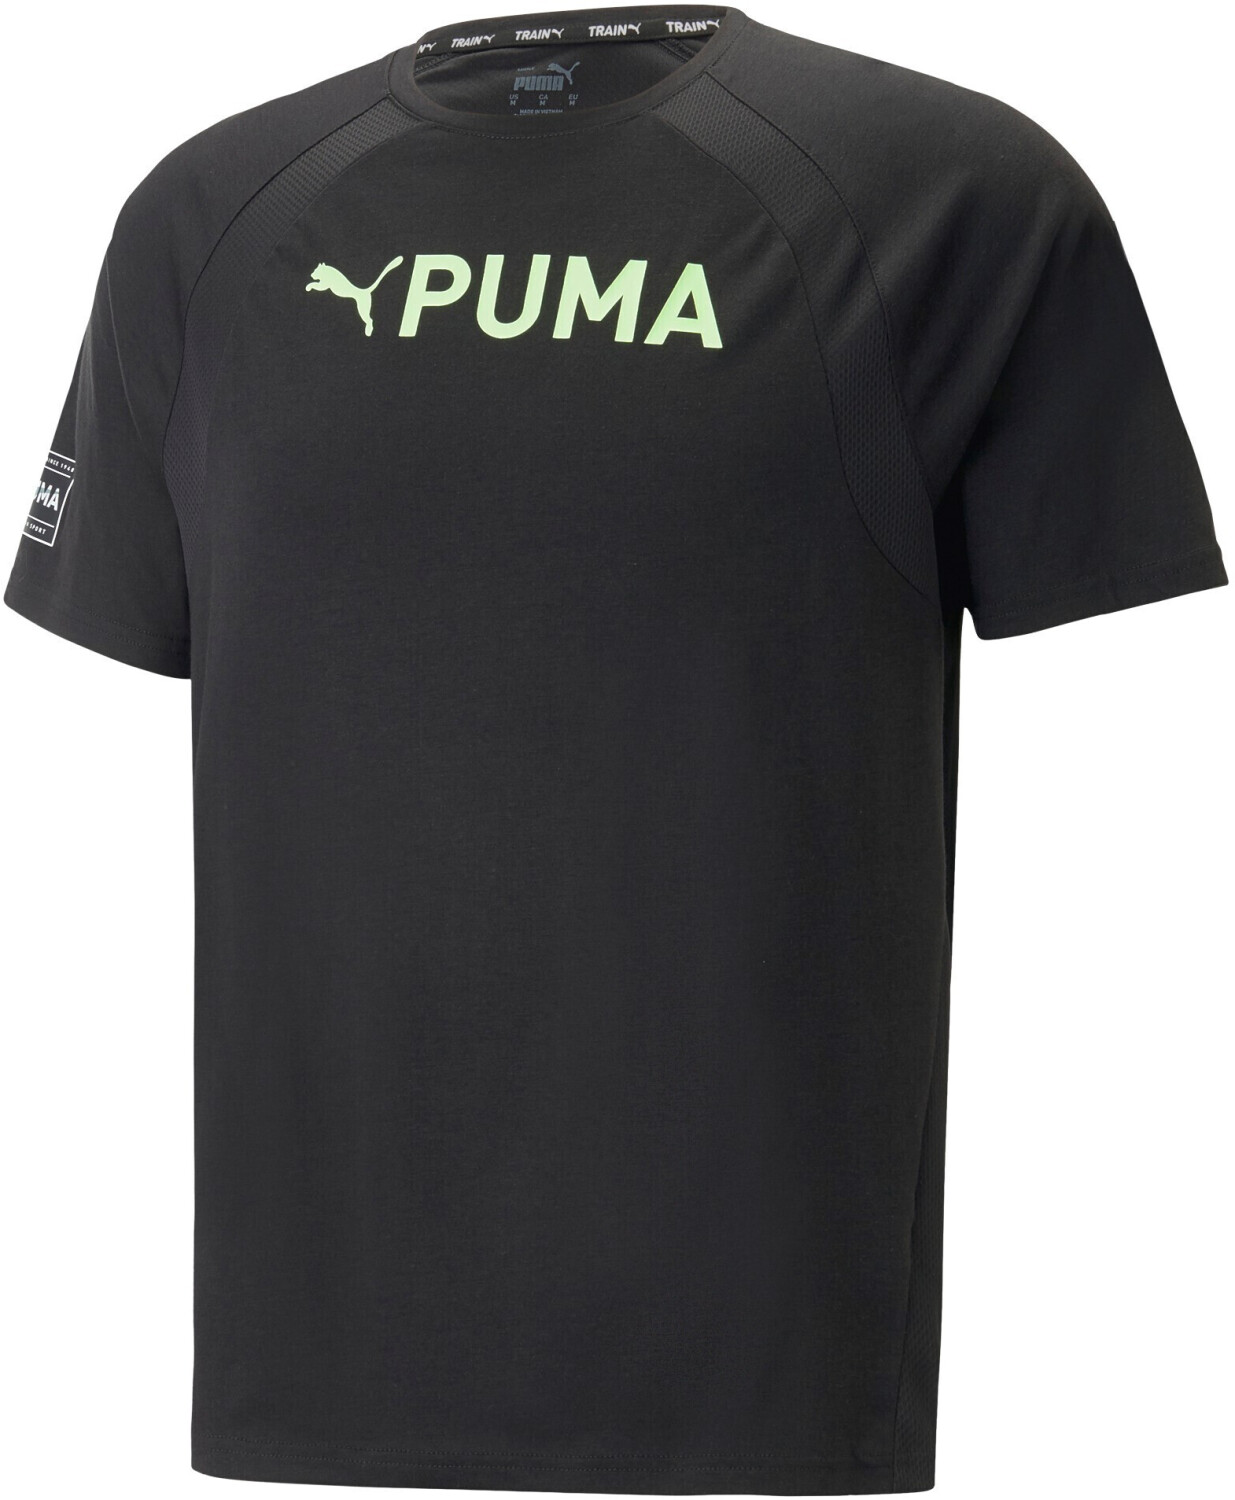 Puma Fit Ultrabreathe Triblend Tee puma black/fizzy lime ab 20,17 € |  Preisvergleich bei